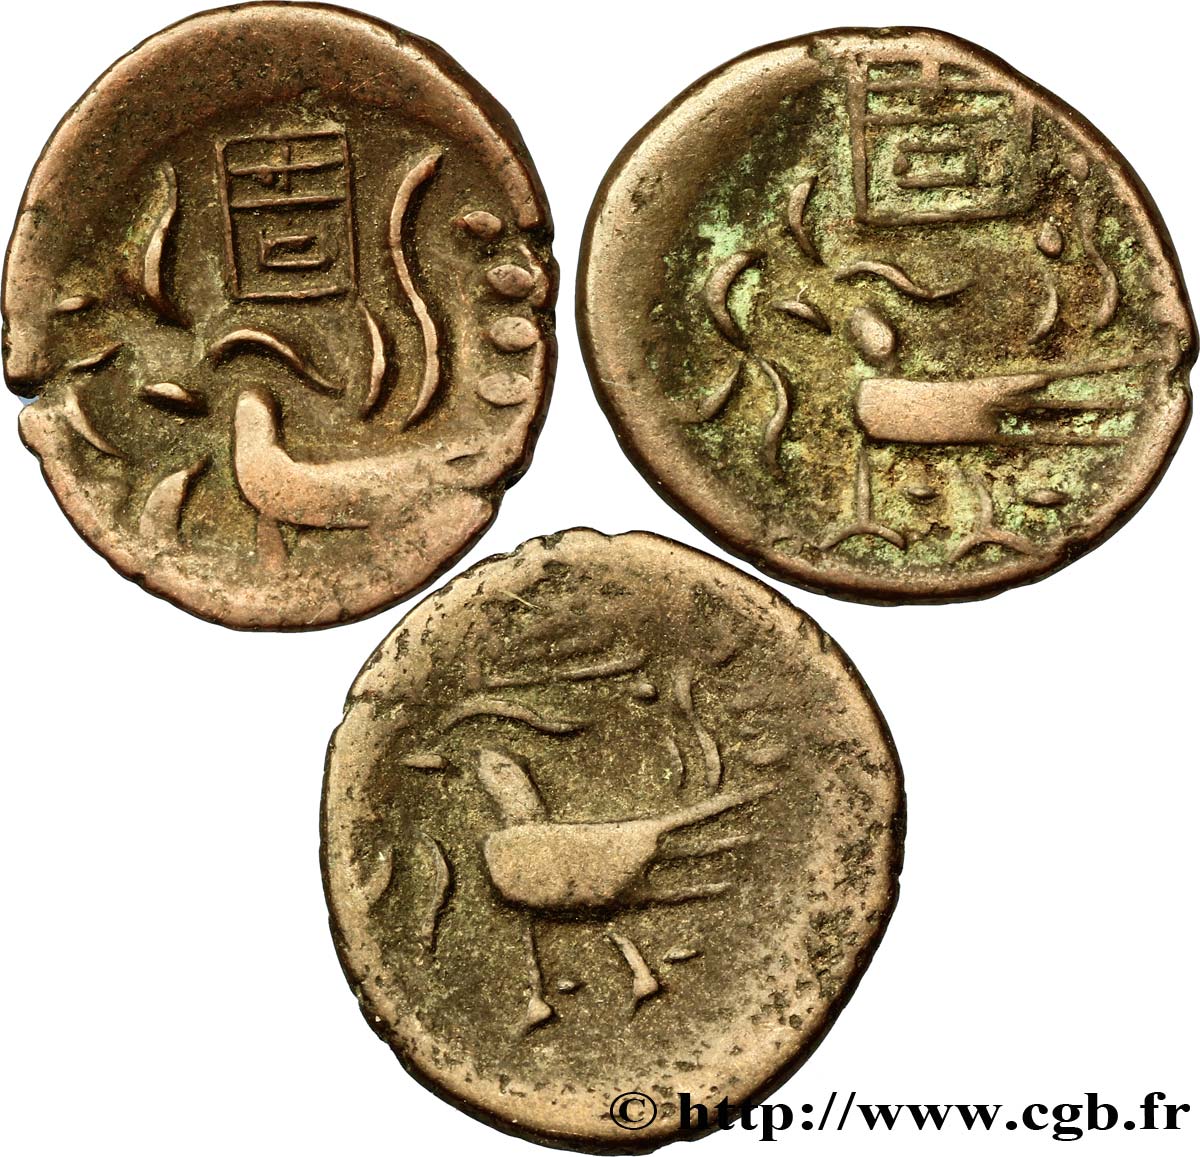 CAMBOGIA Lot de 3 monnaies de 2 Pe - Royaume du Cambodge Ang Duaong n.d  MB 